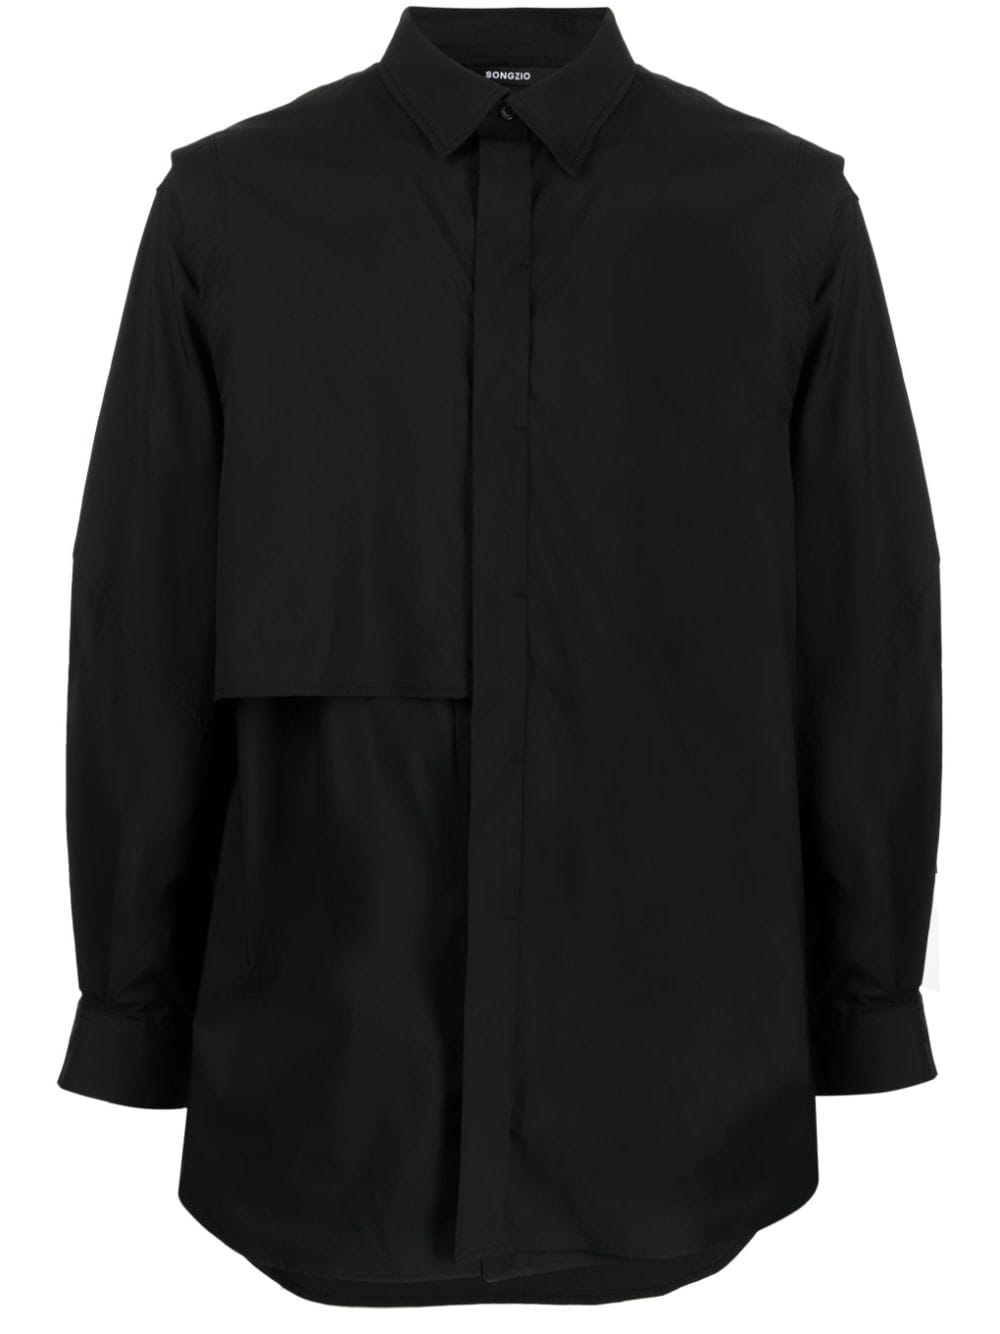 Songzio Eclipse Cotton-blend Shirt In Black